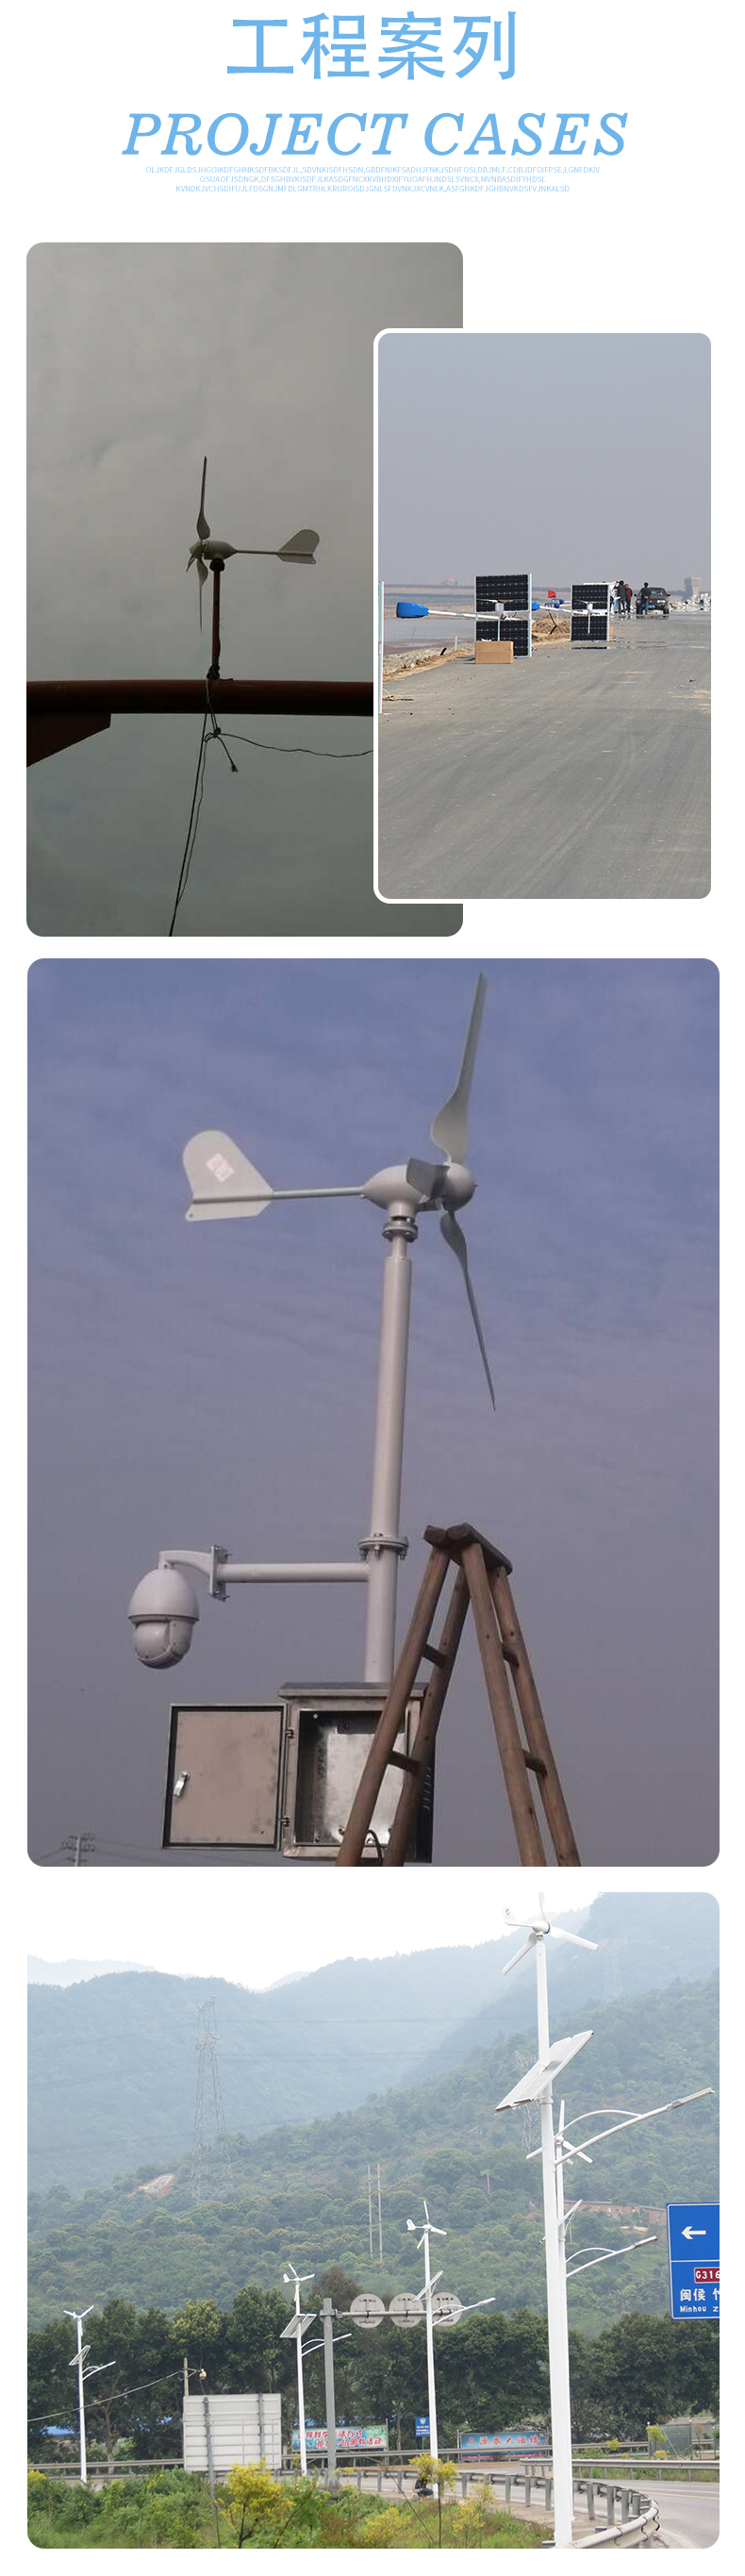 M3 400-600W风力发电机